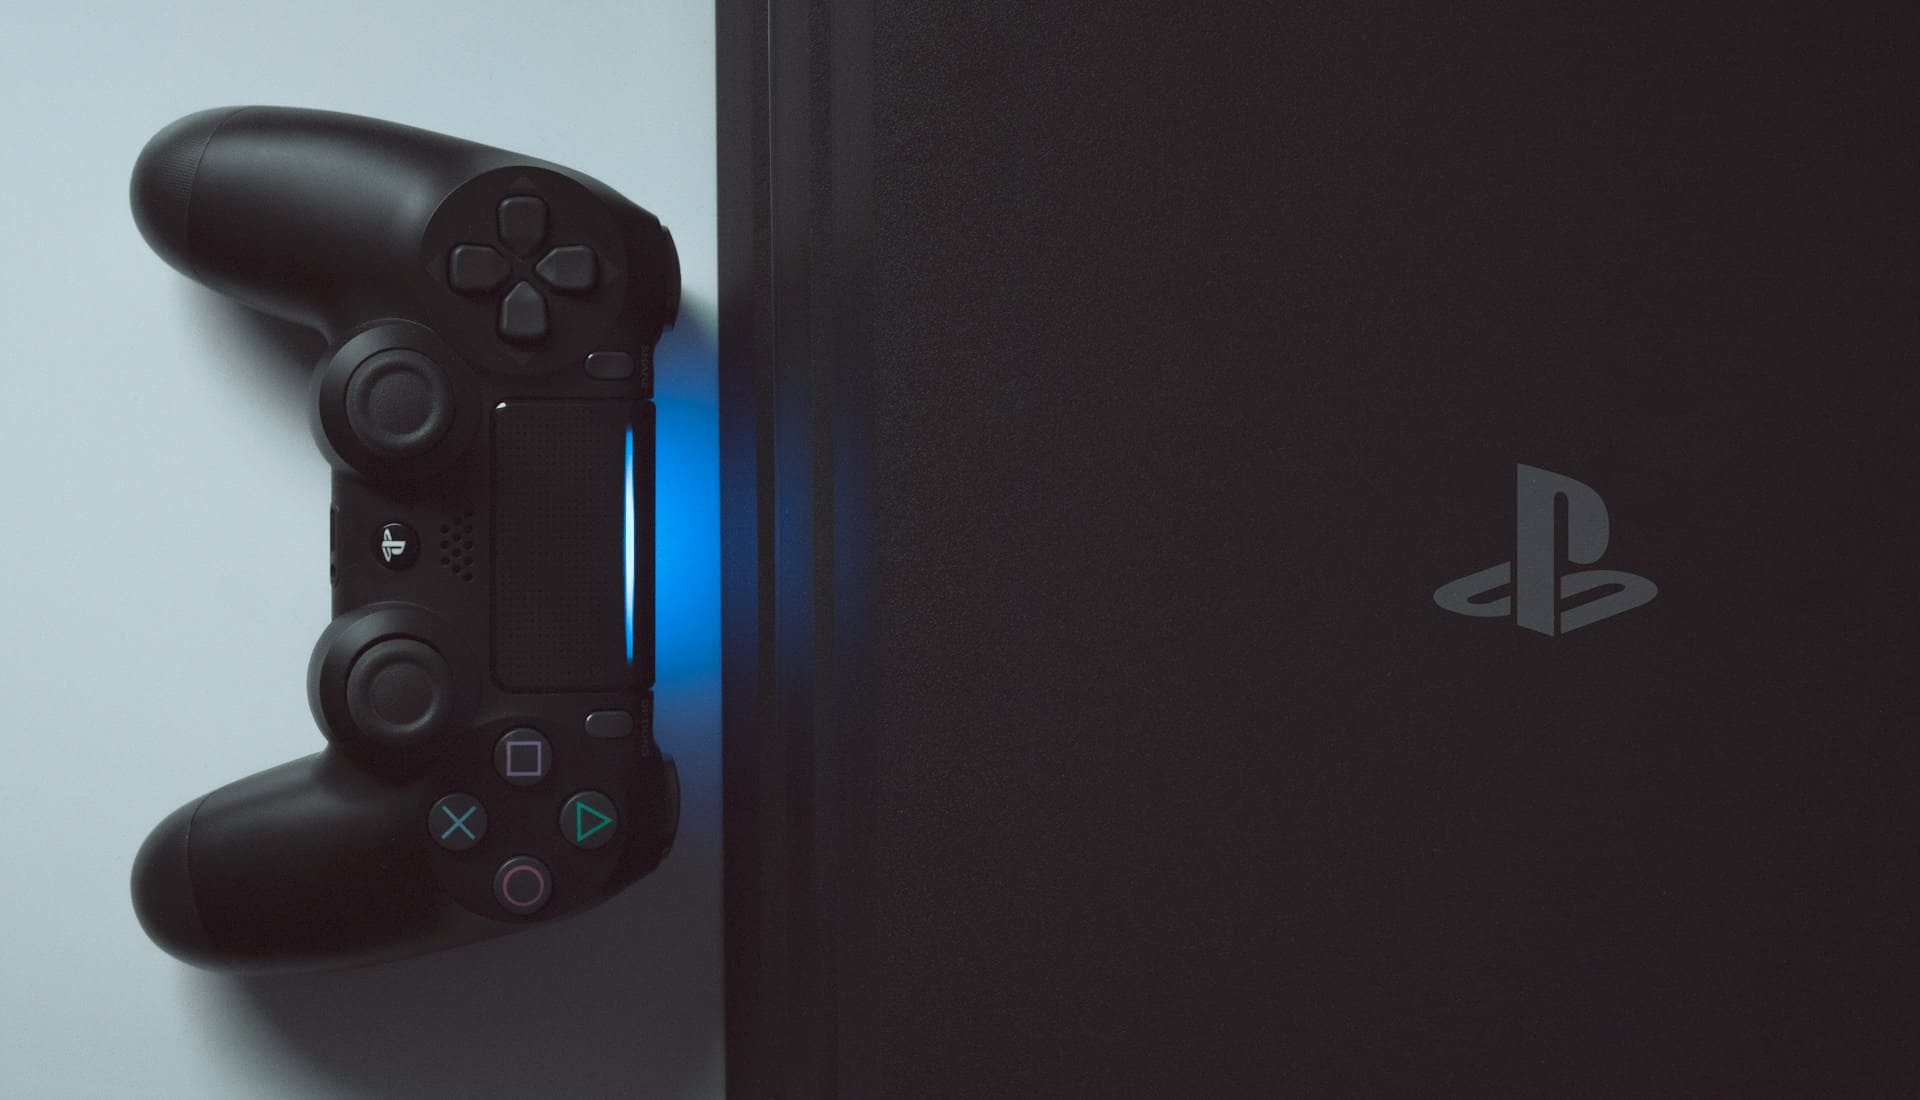 PS4 Konsole mit DualShock Controller